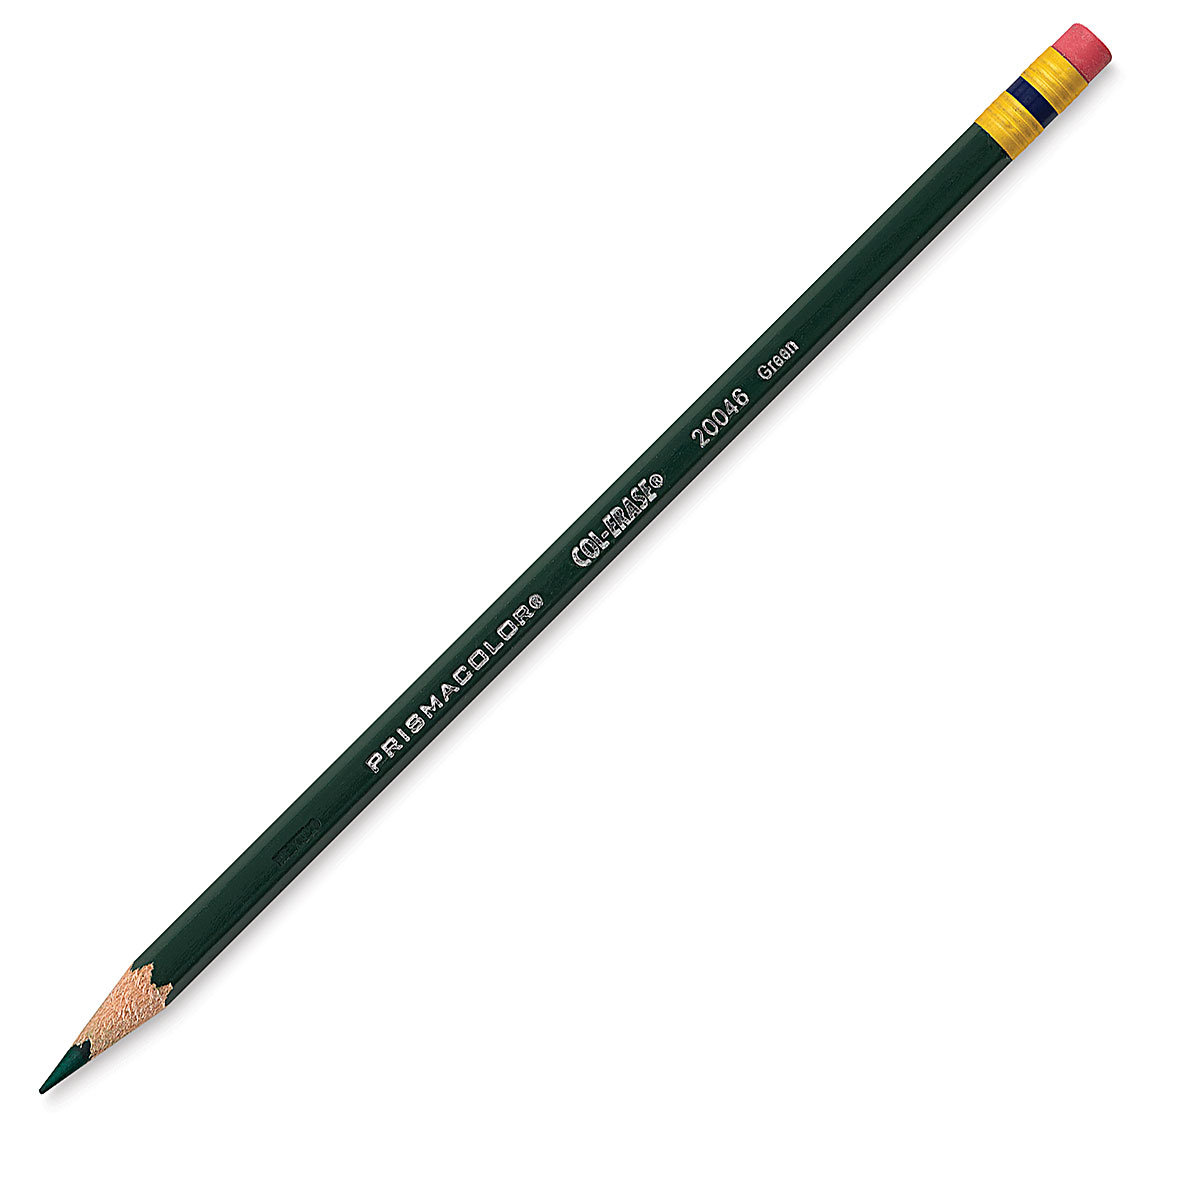 Prismacolor Premier Col-erase Erasable Colored Pencil Set - 24